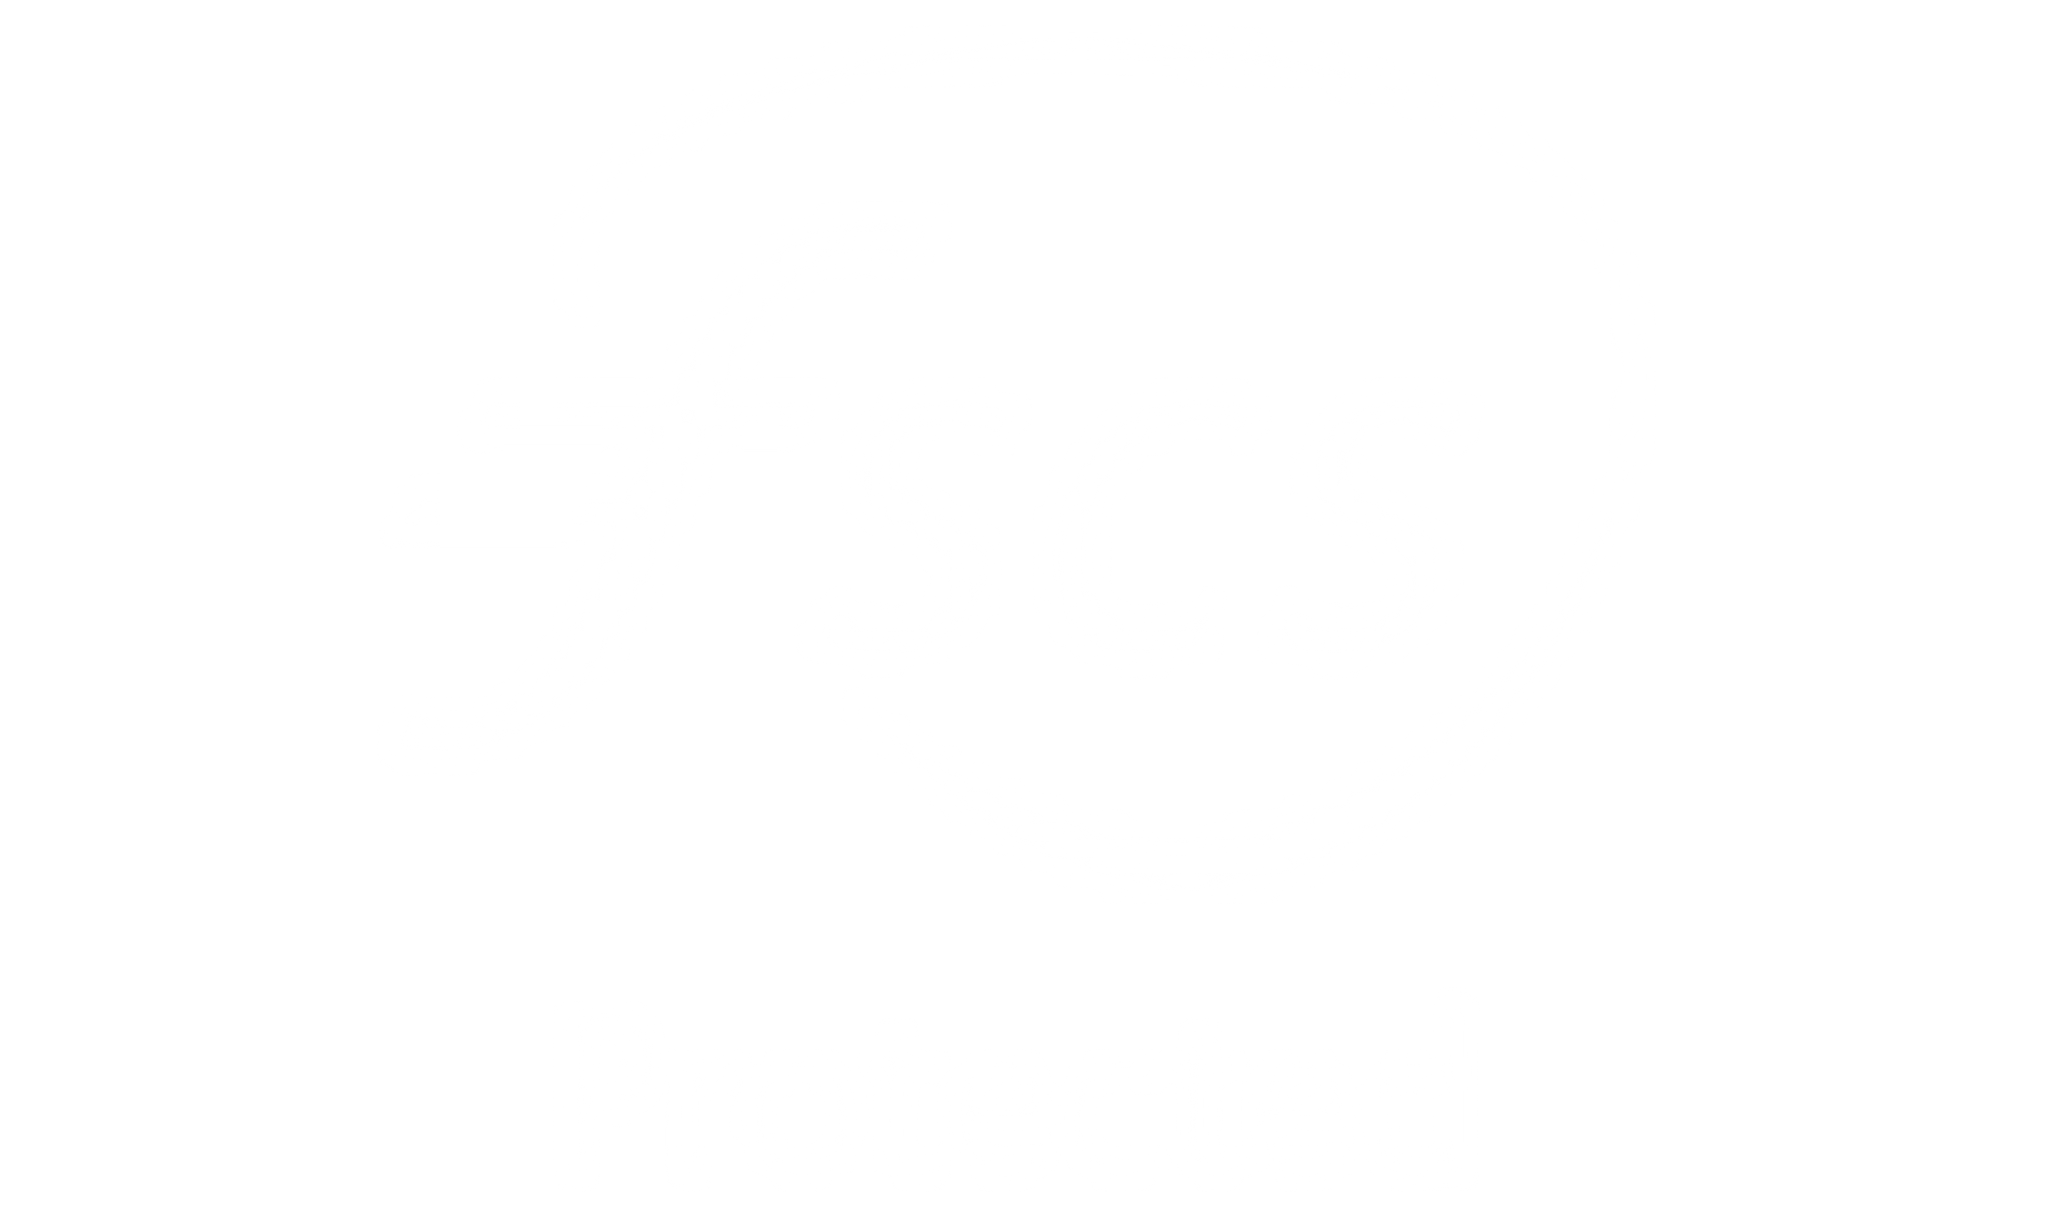 FSCS logo